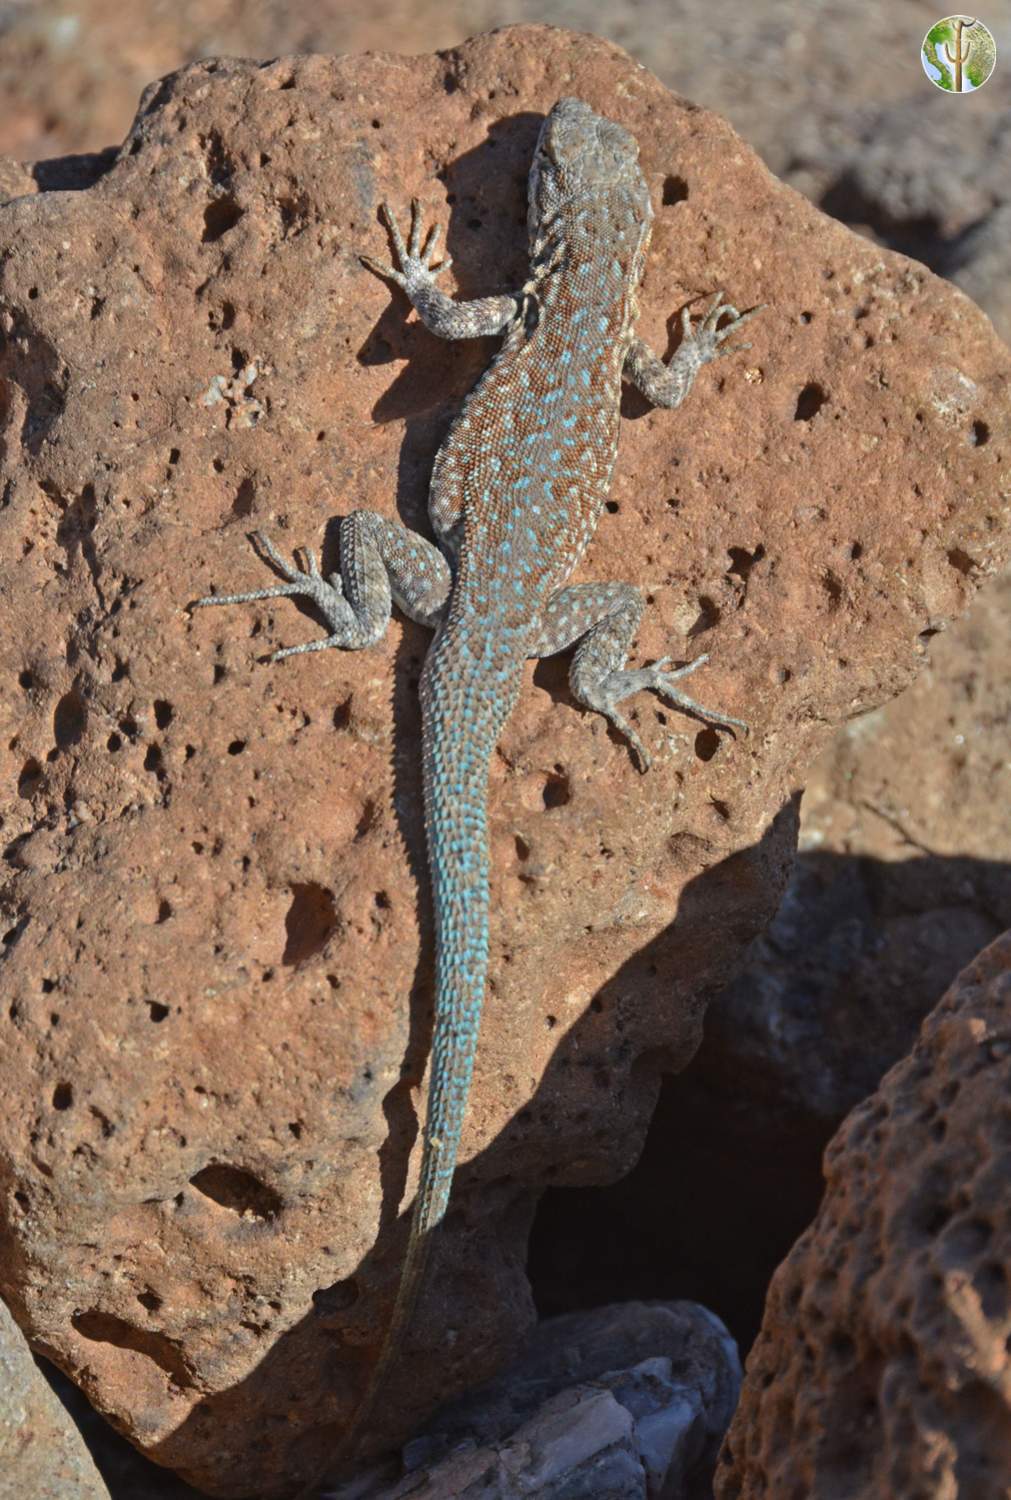 Uta stansburiana, common side-blotched lizard (Male)